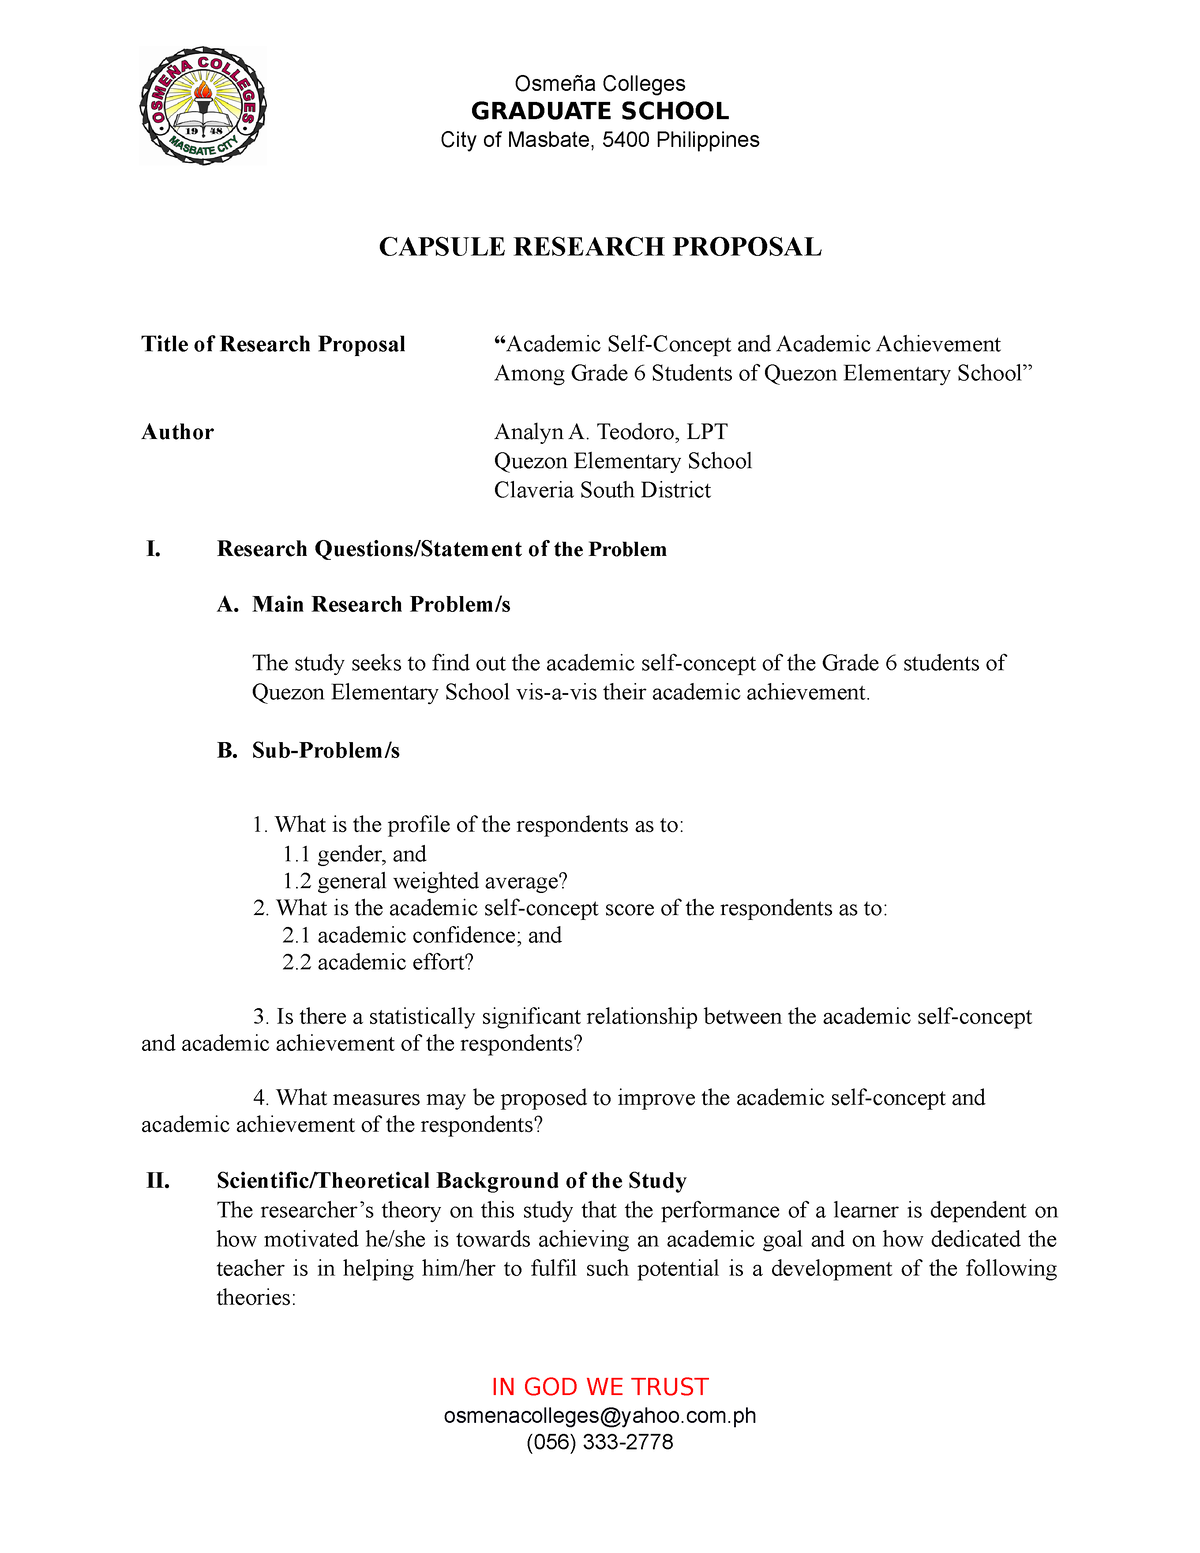 capsule research proposal format